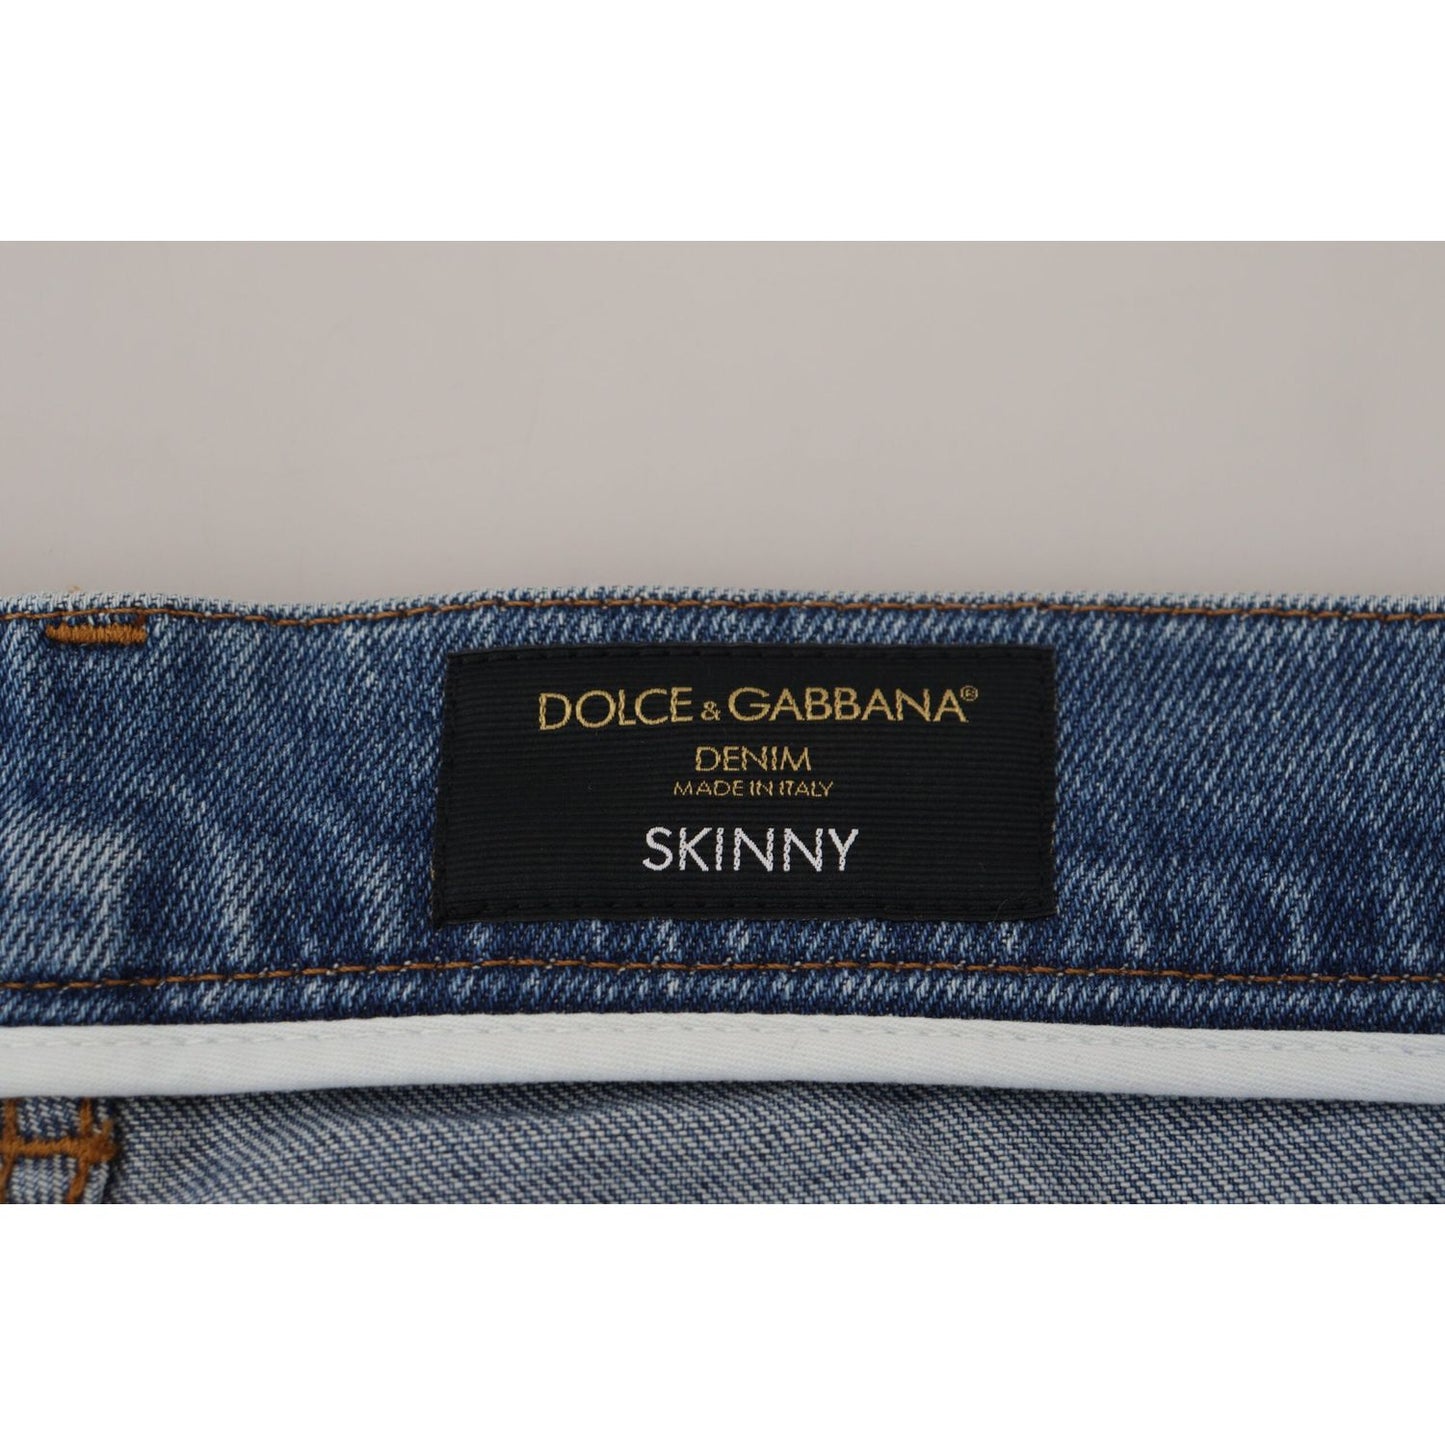 Dolce & GabbanaExquisite Italian Skinny Denim JeansMcRichard Designer Brands£379.00